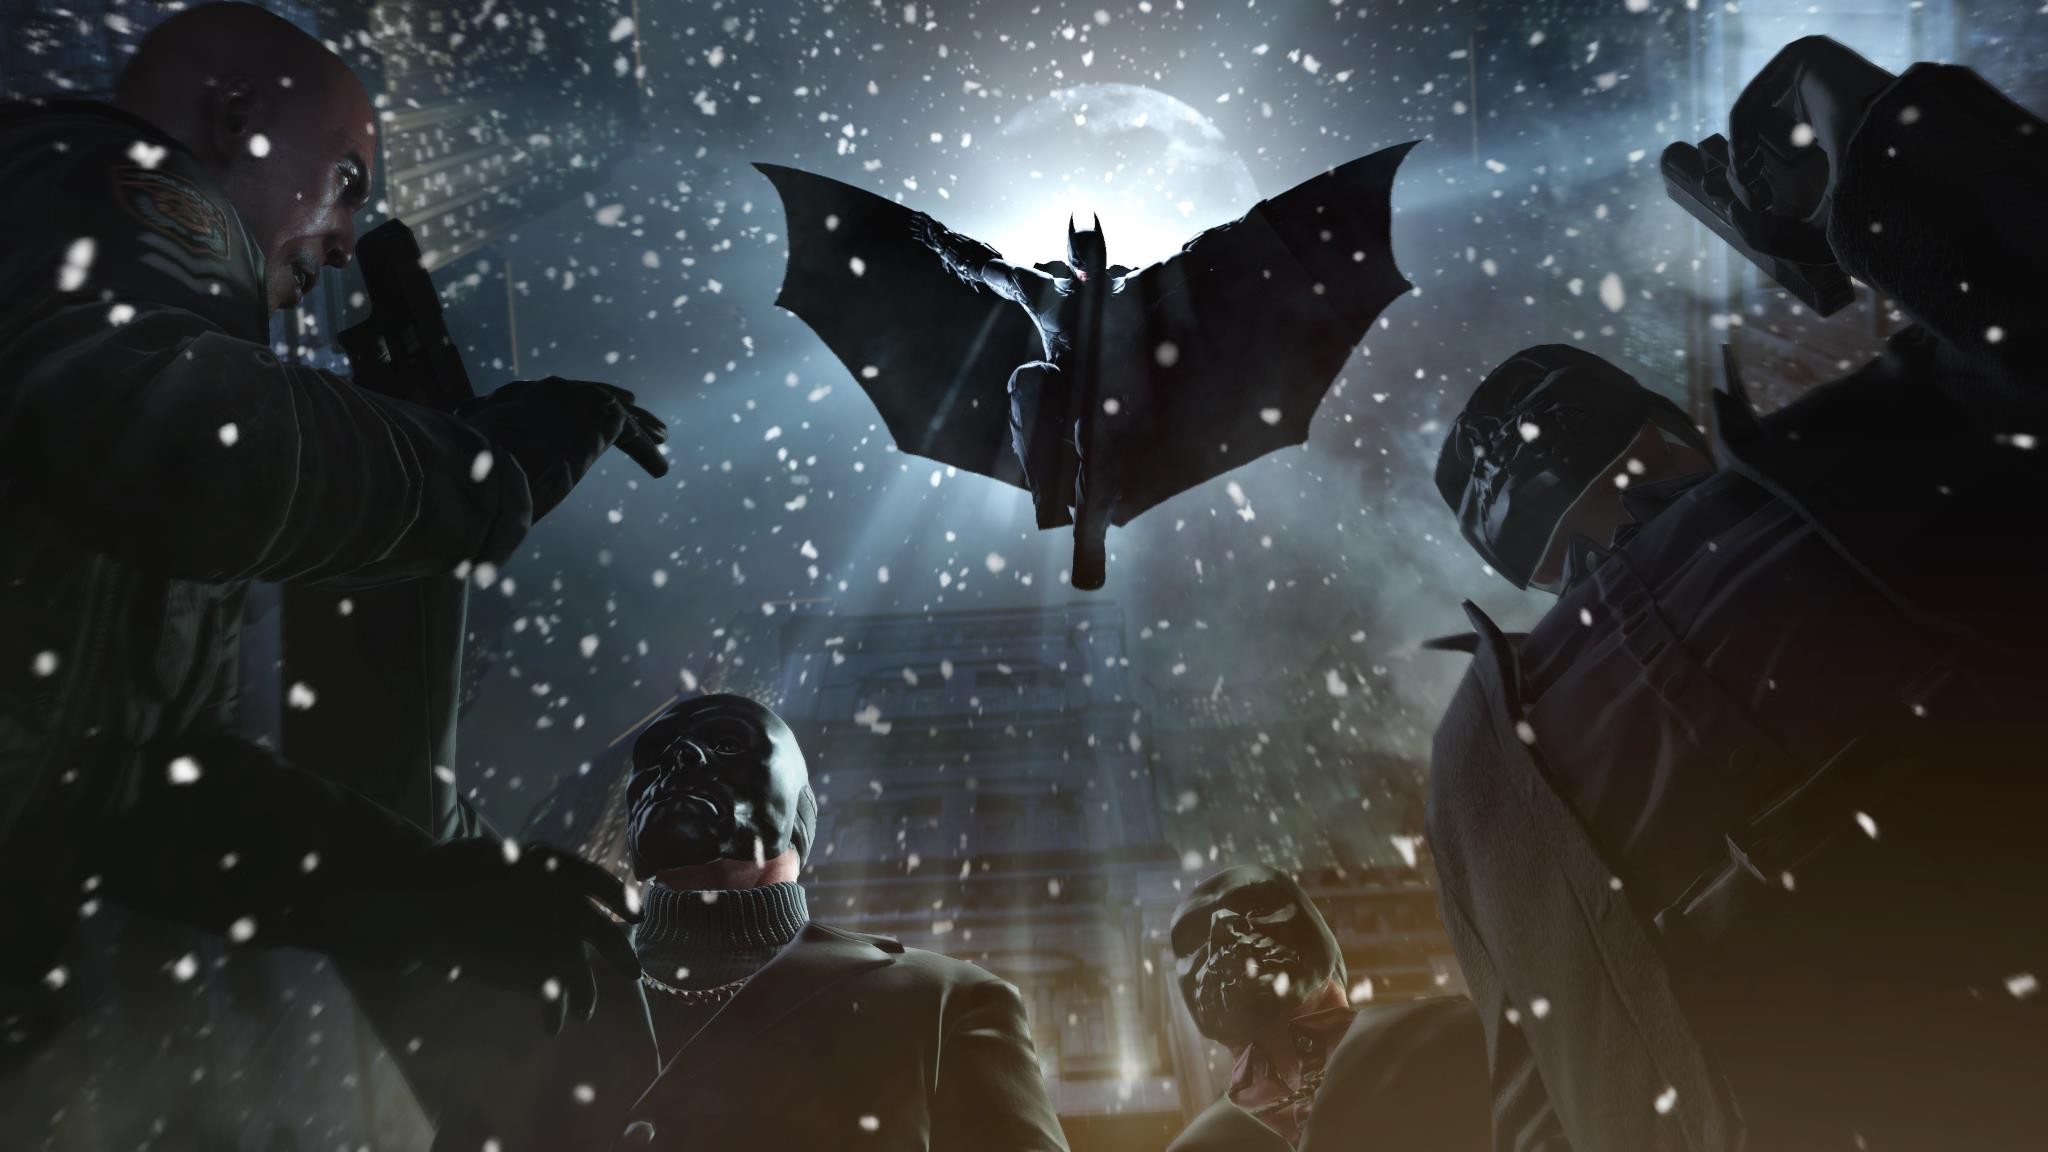 Скачать картинку Бэтмен: Летопись Аркхема, Бэтмен, Видеоигры в телефон бесплатно.